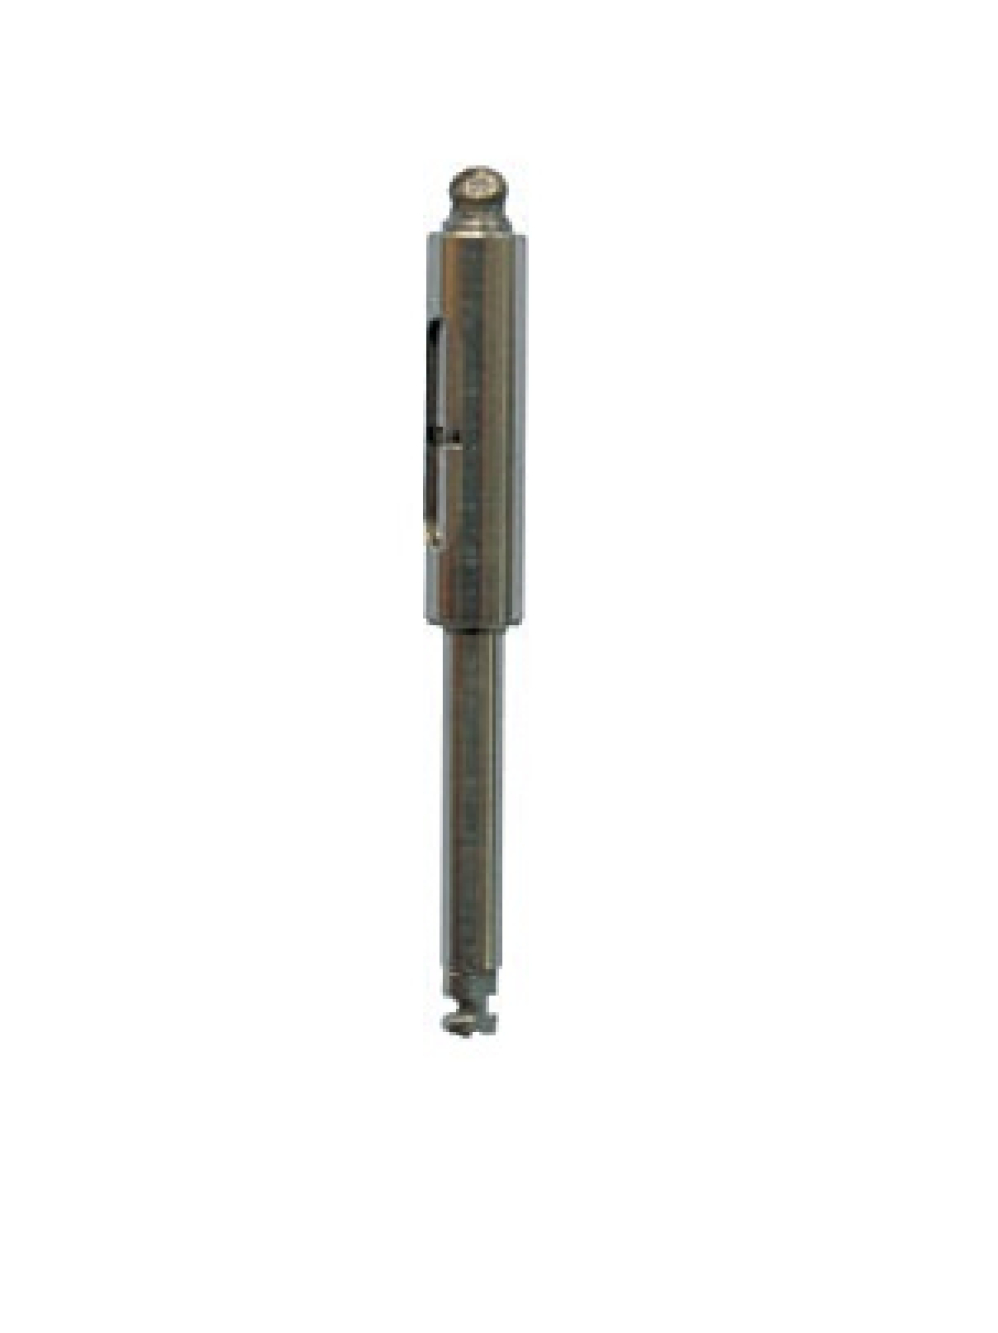 MAS-01-01 Стоматологическая магнитная фреза для синус-лифтинга, диаметр 2.8/3.8 мм, глубина 2 мм, Mr.Curette Tech, Южная Корея